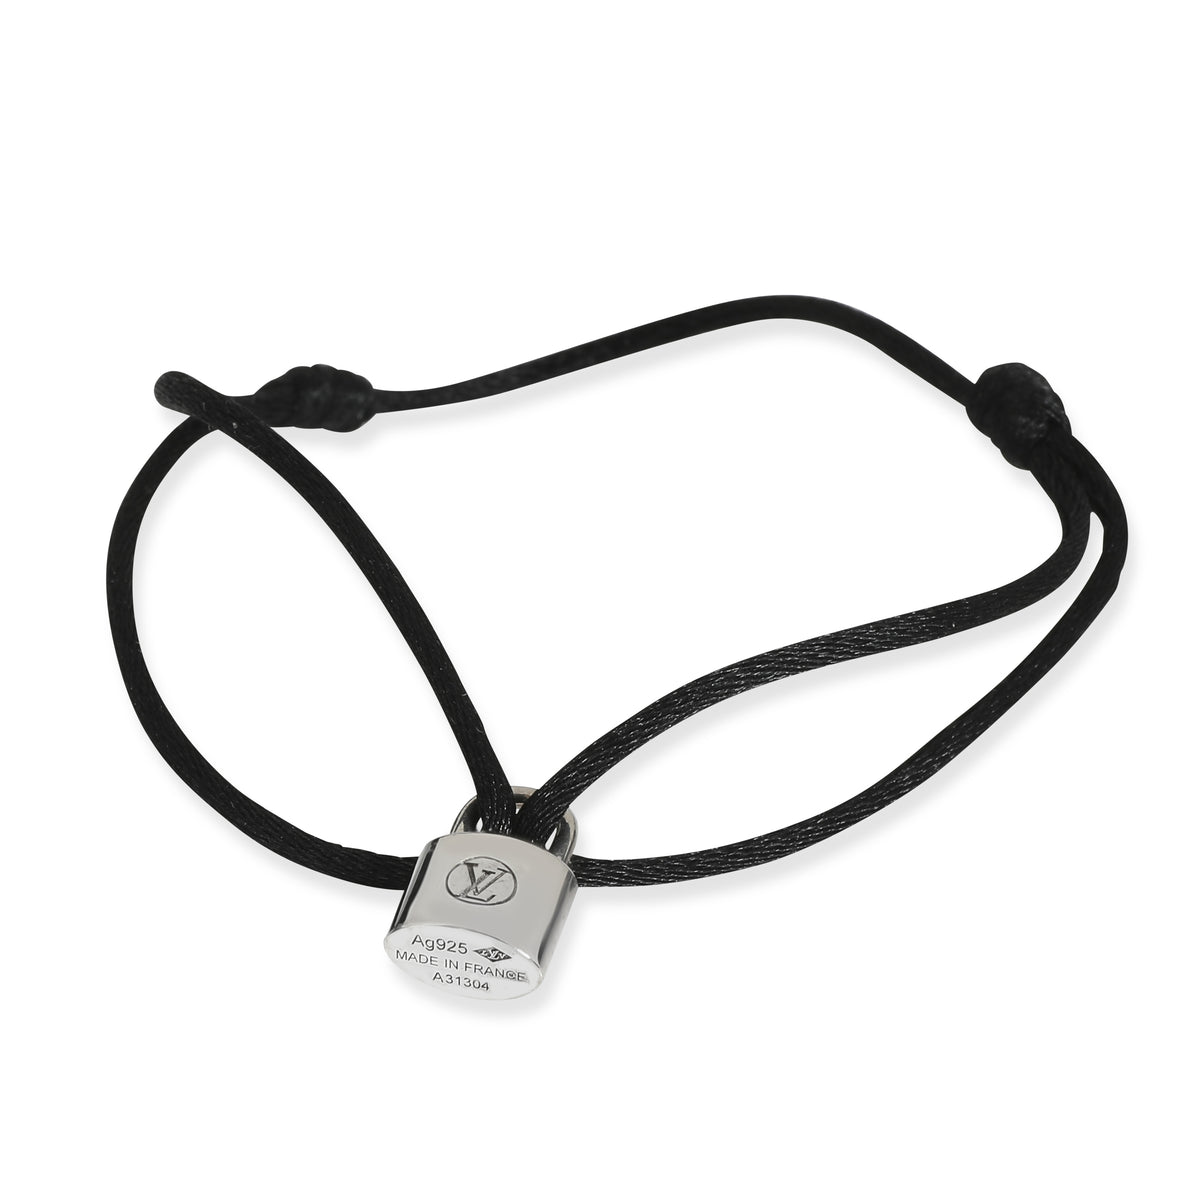 Louis Vuitton Tone Lockit Cord Bracelet in Sterling Silver